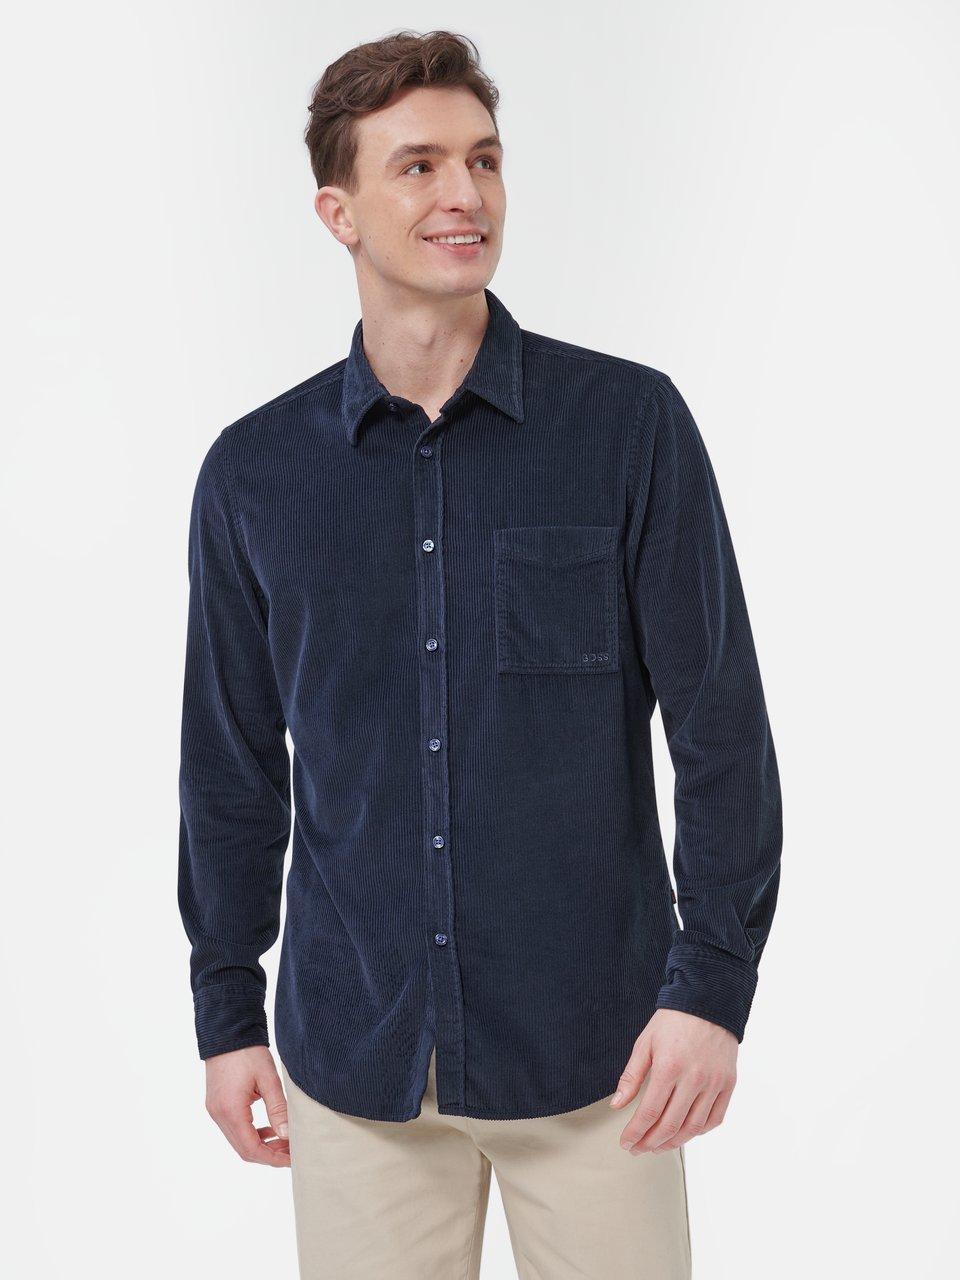 Herrenhemden online kaufen | bei Peter Hahn Hemden